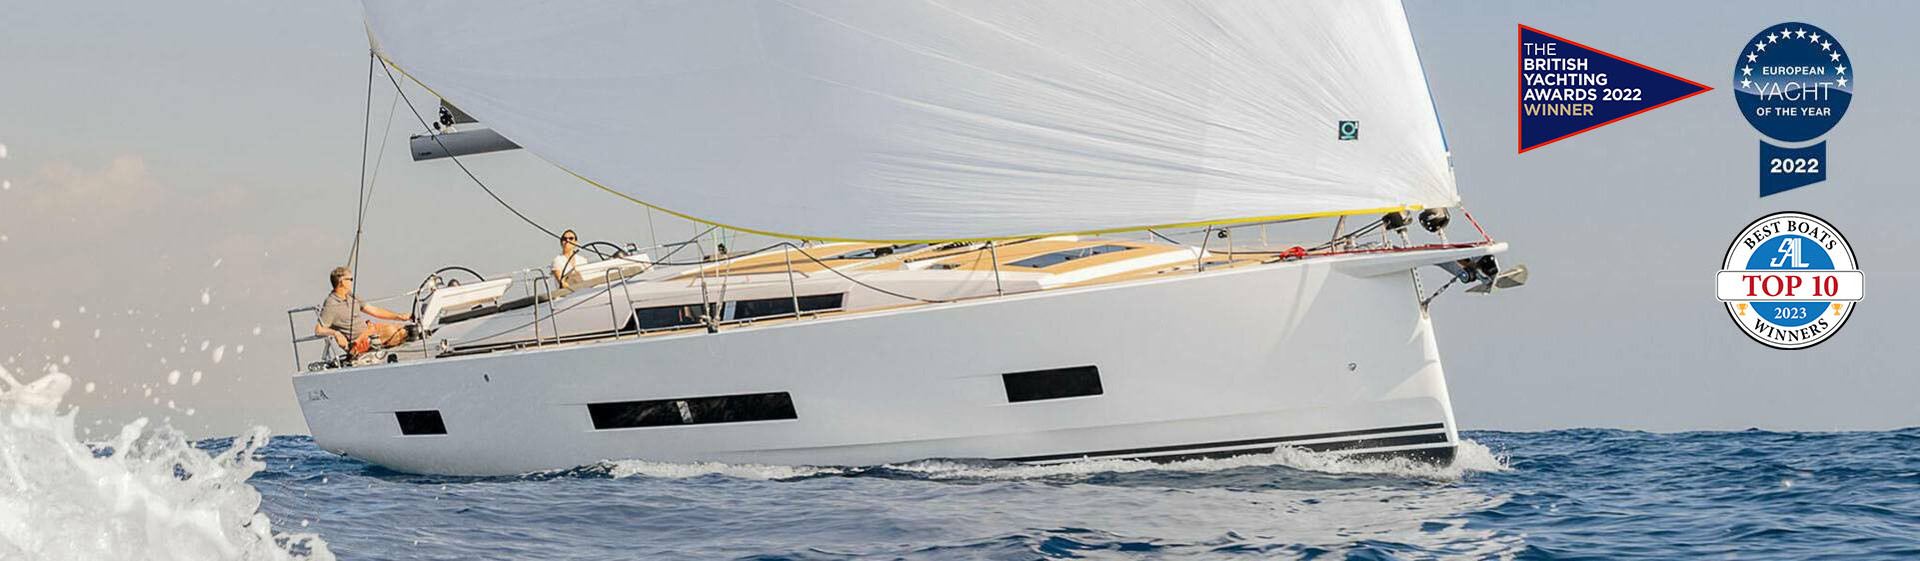 yacht a vela ad alte prestazioni in acqua blu 